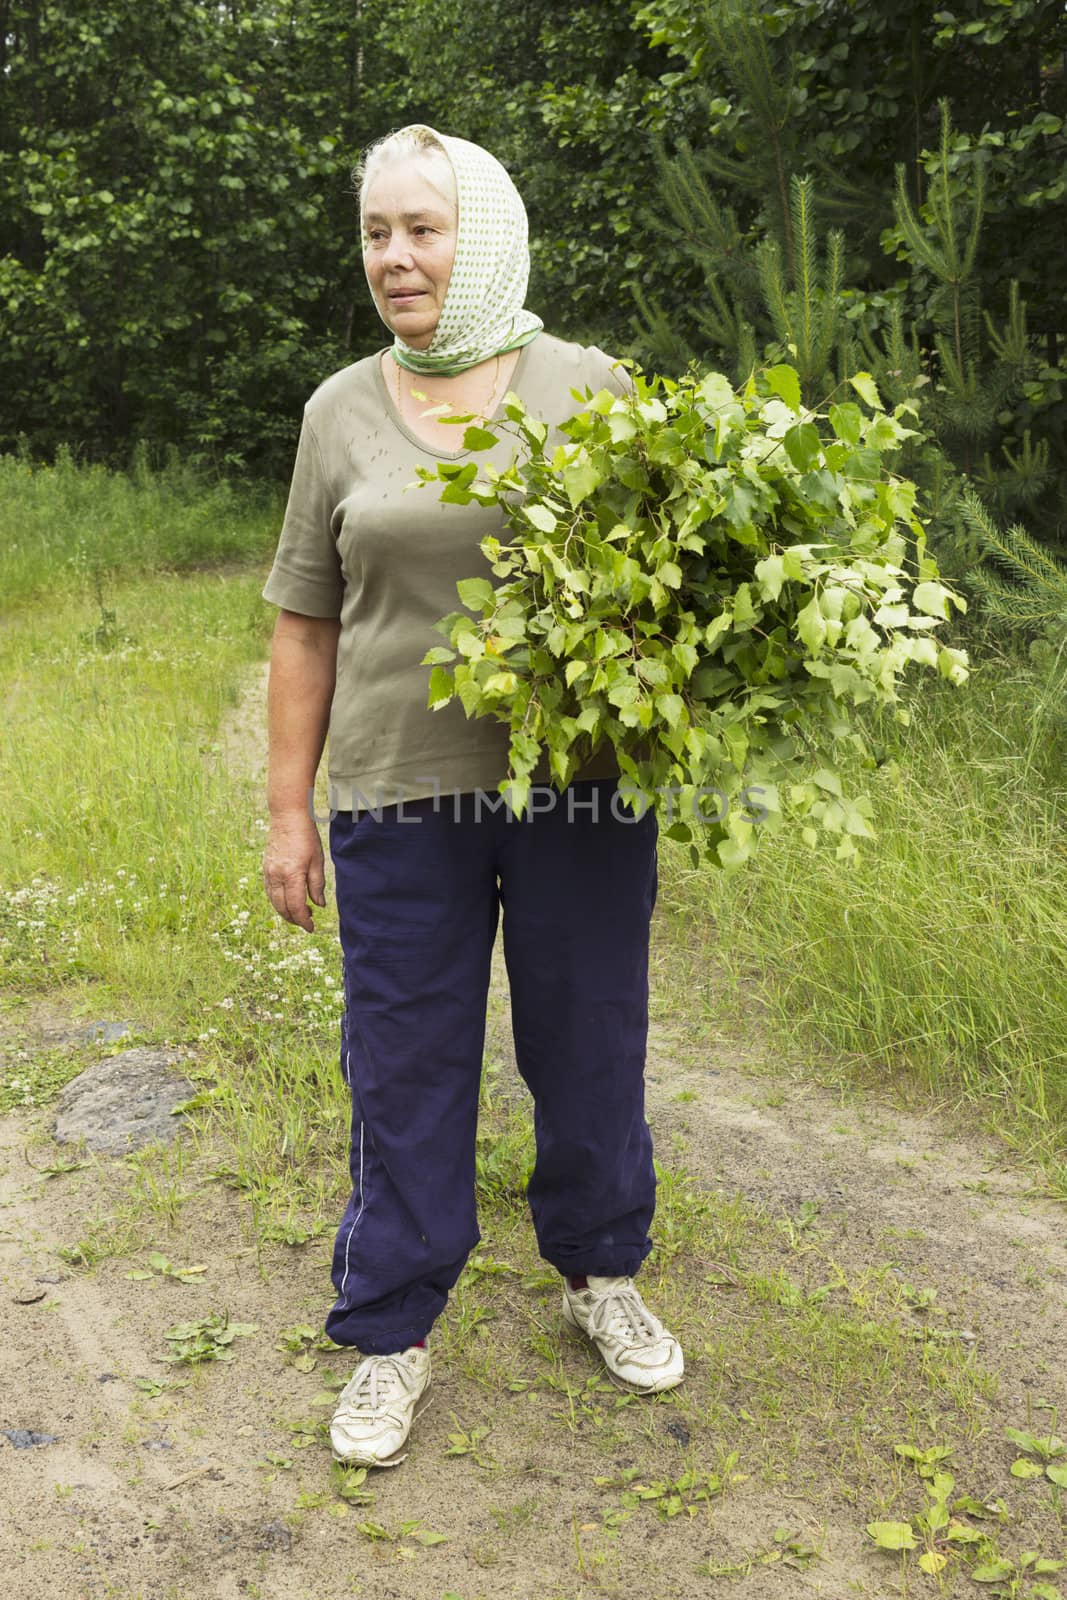 Mature beautiful woman prepares birch twigs in June